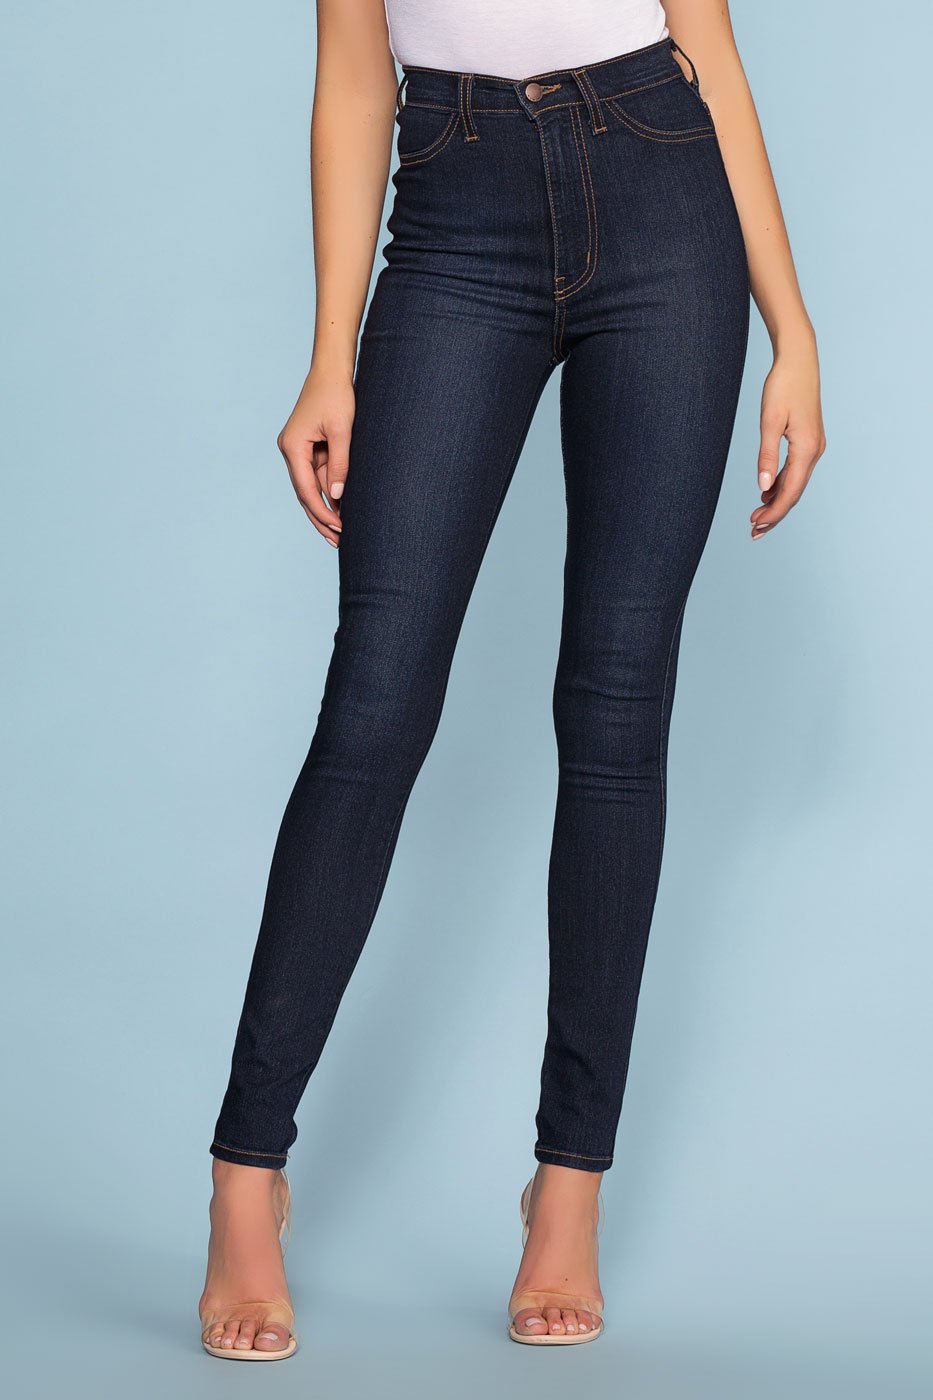 MECALA Womens High Rise Skinny Jeans High Waist Denim Pants Jeggings,Light  Blue,2XL - Walmart.com